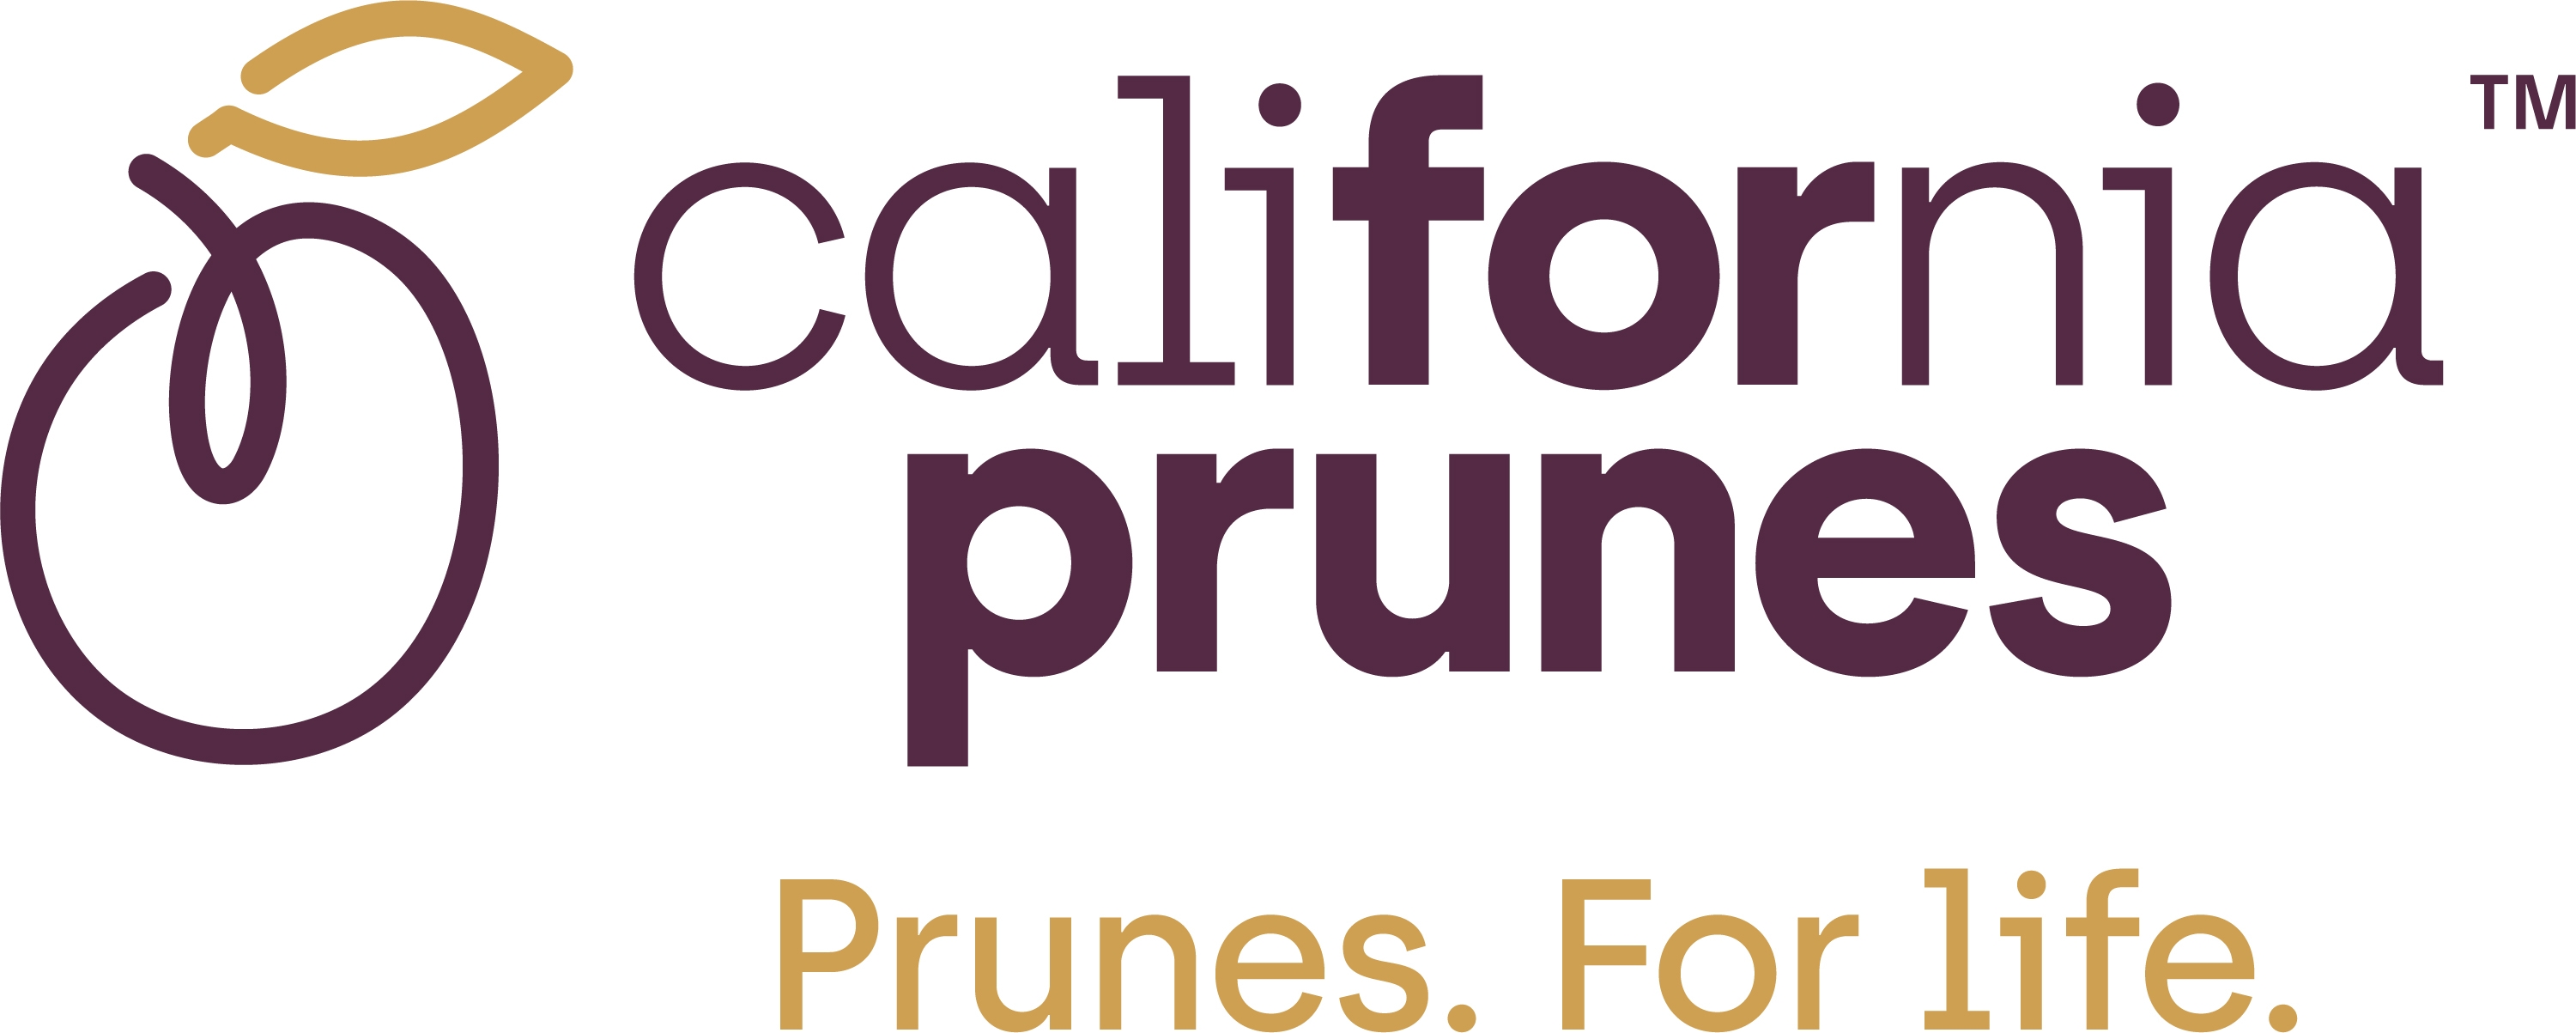 California Prunes Logo.jpg